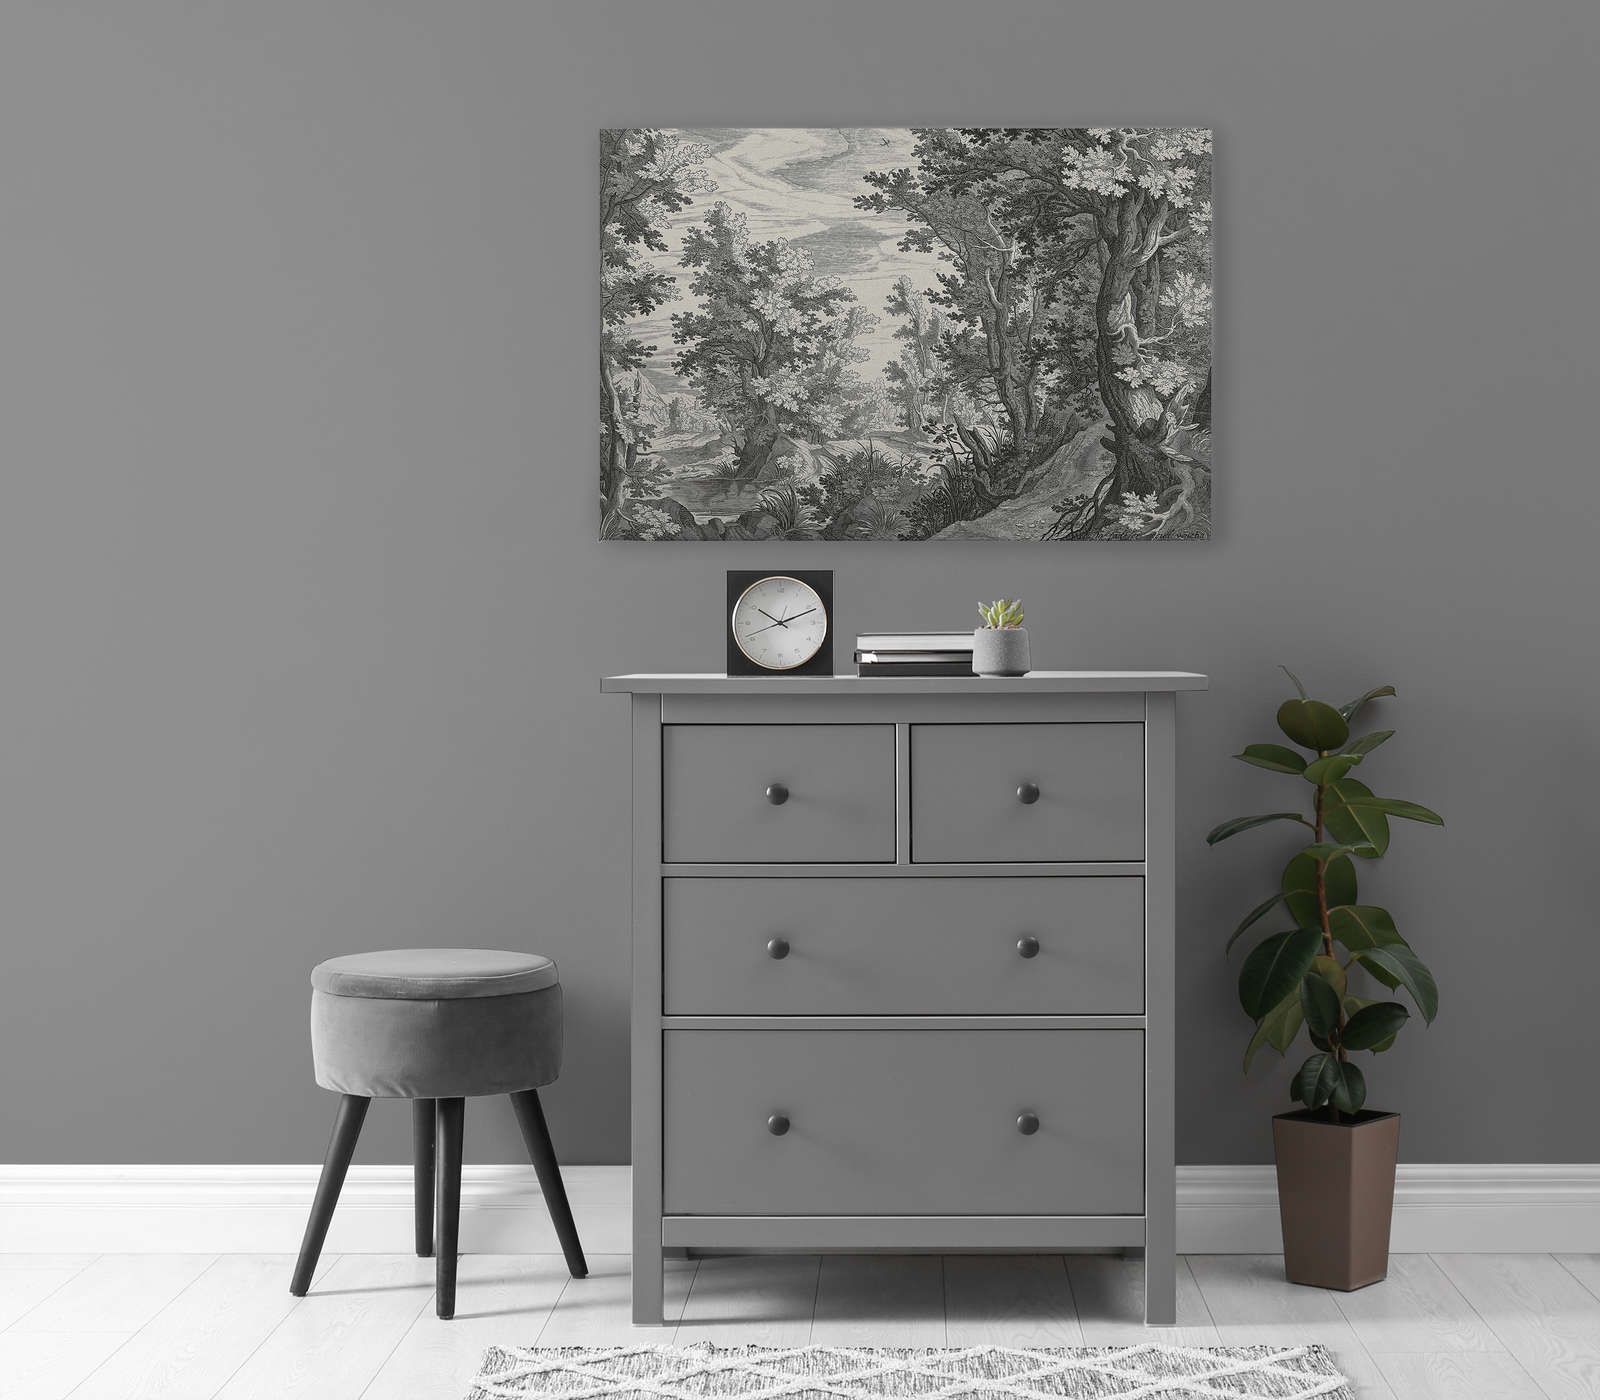             Fancy Forest 3 - Canvas schilderij Landschap Copperplate zwart-wit - 0.90 m x 0.60 m
        